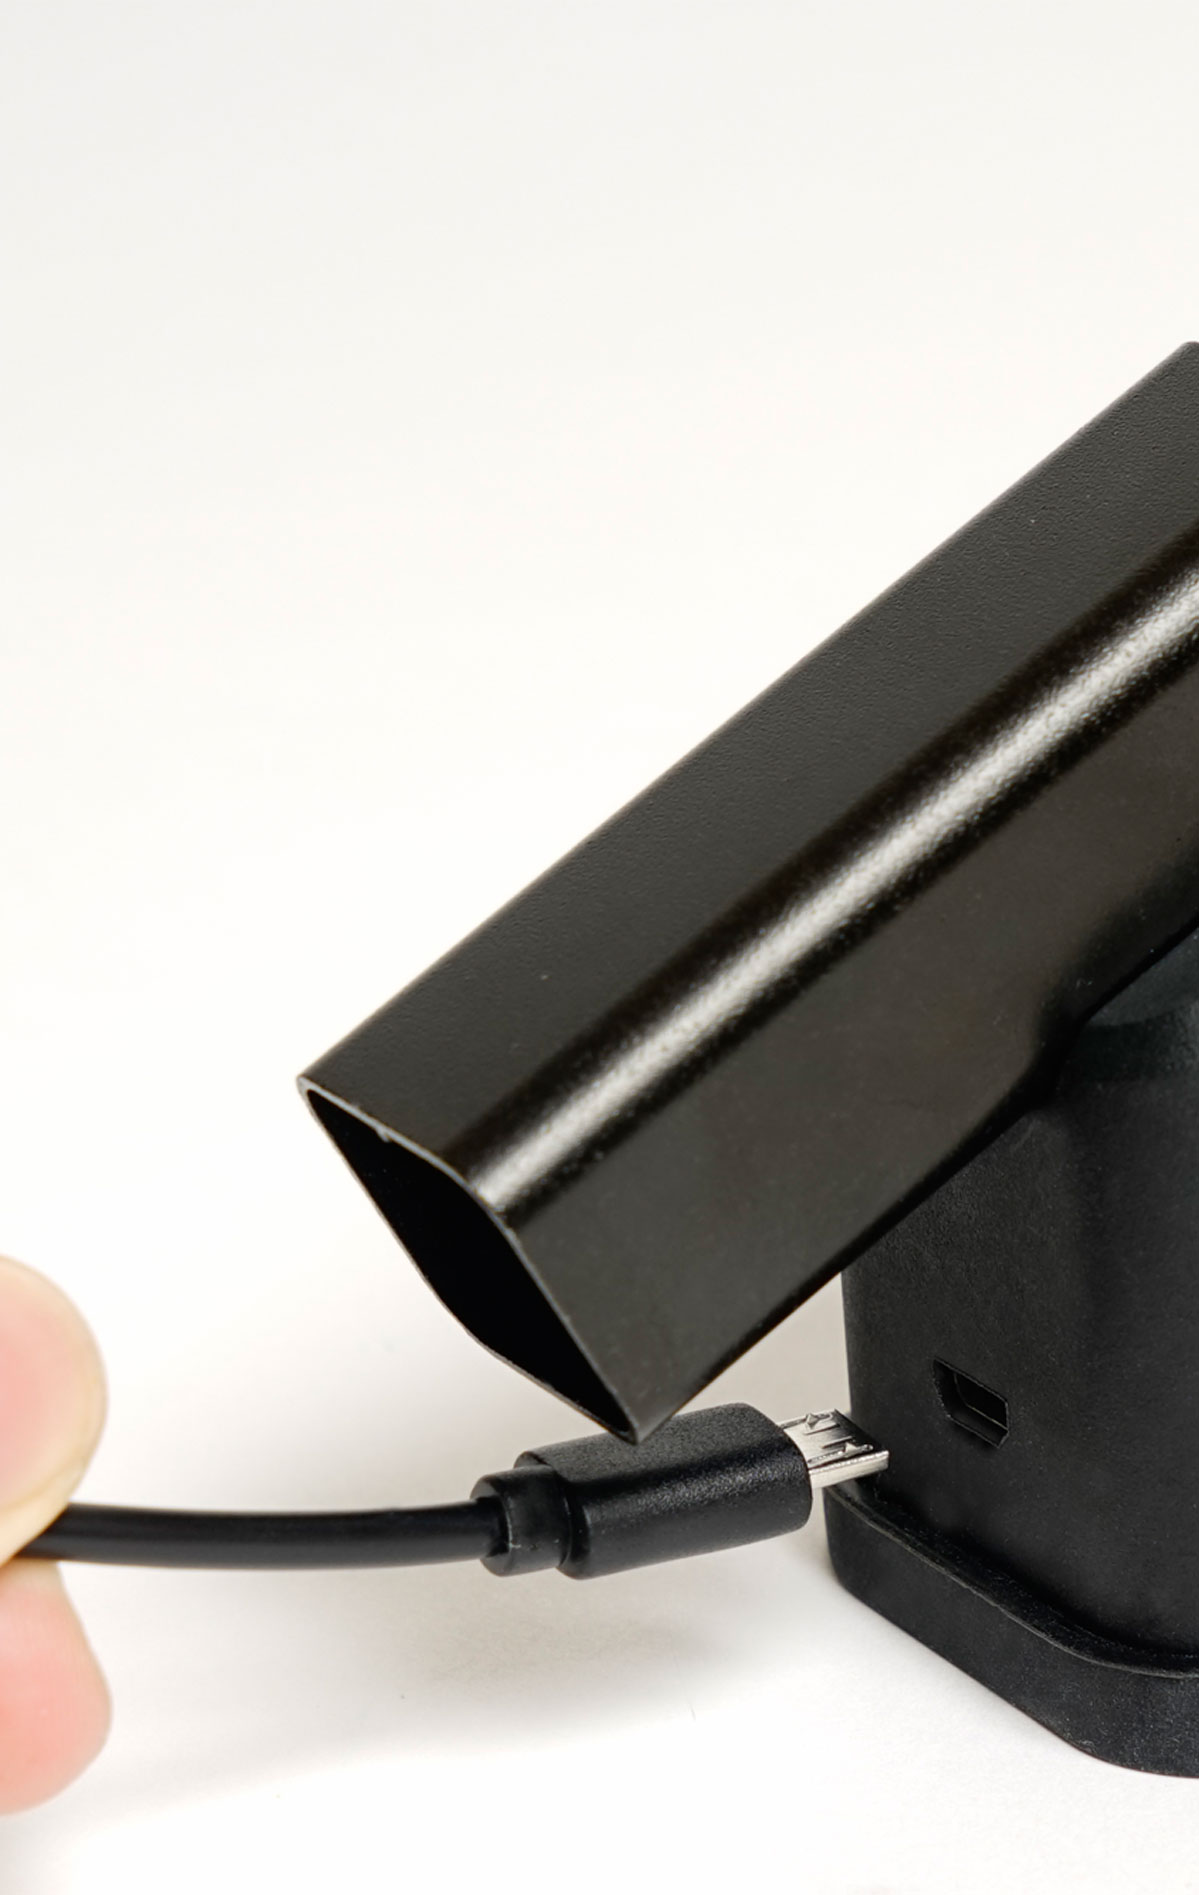 Wireless Power Soldering Iron  USB rechargable, fast heat up